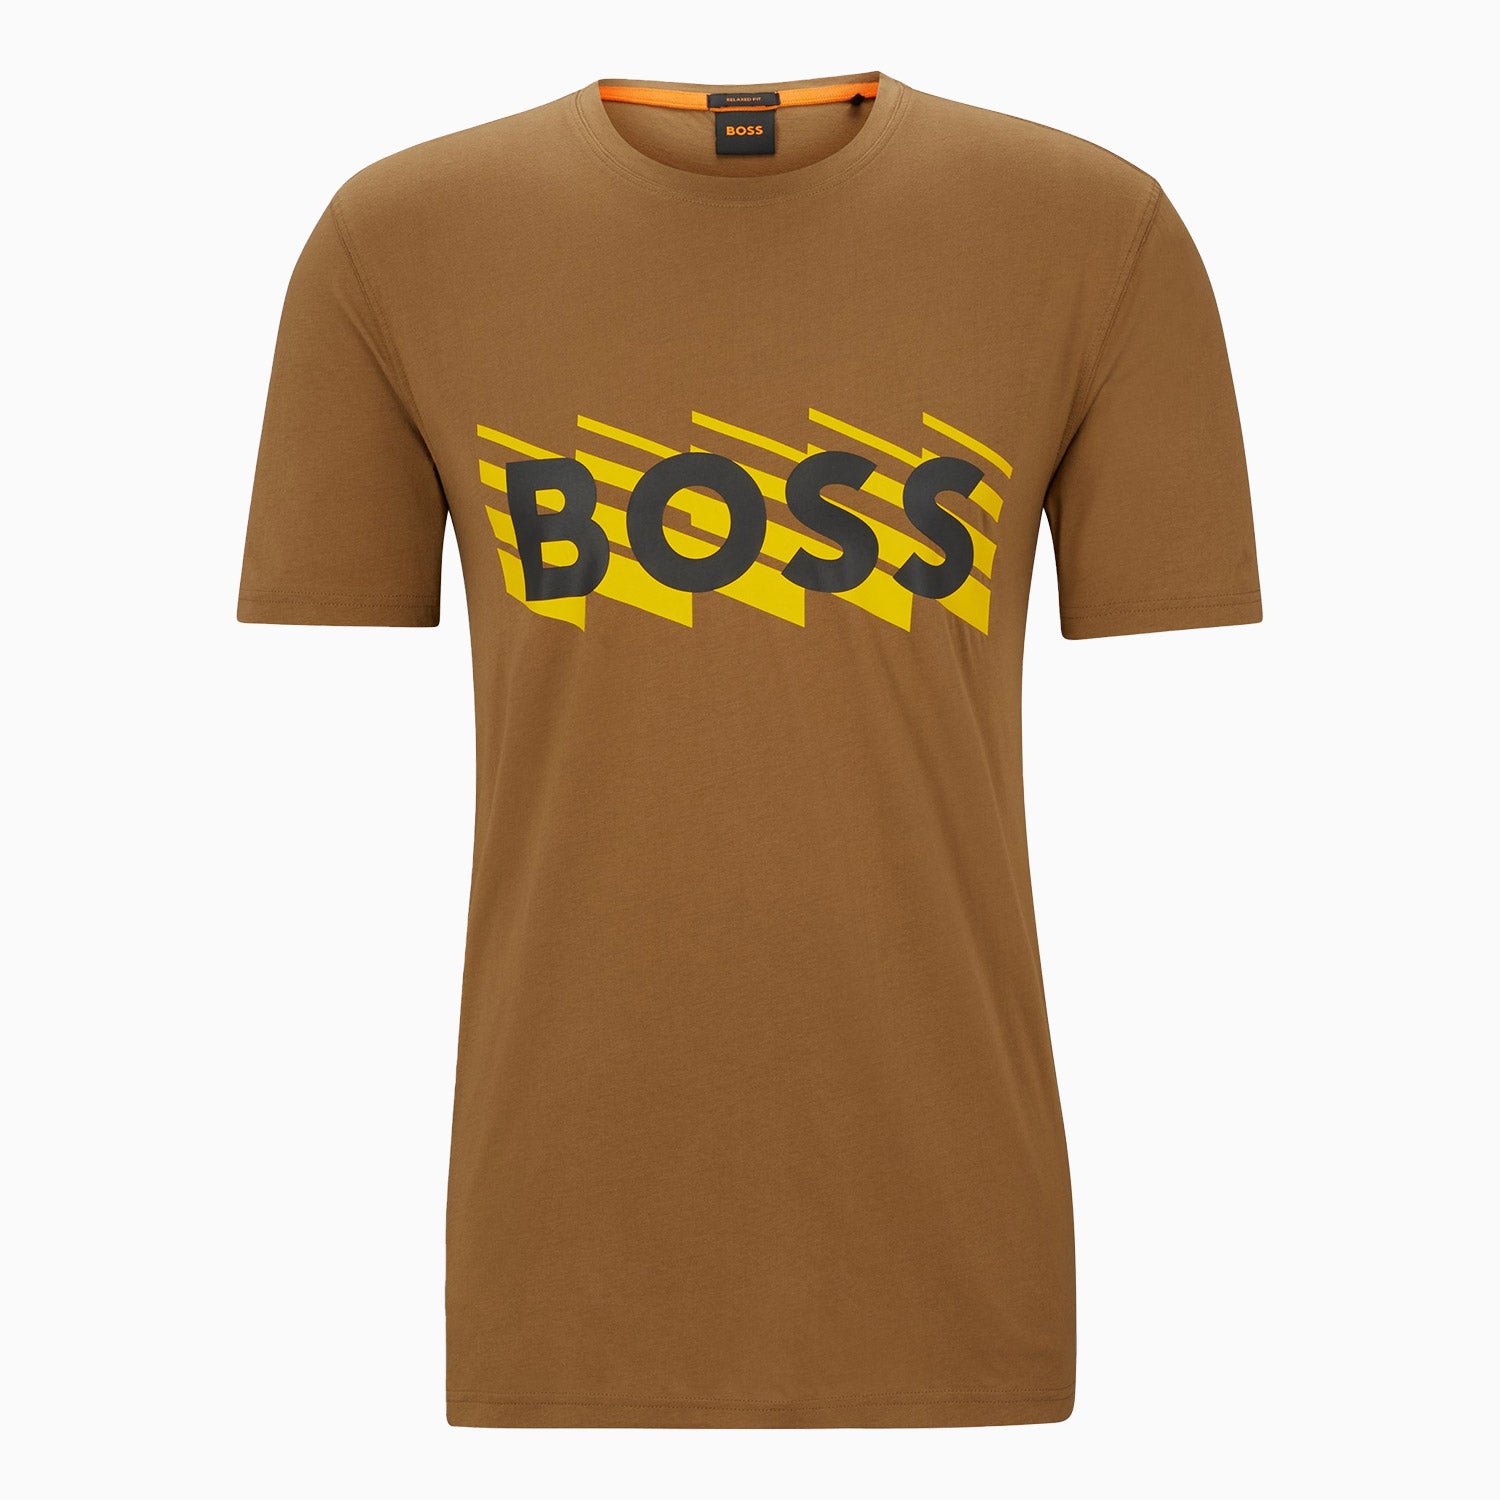 hugo-boss-mens-cotton-jersey-t-shirt-with-rubber-print-logo-50495719-280